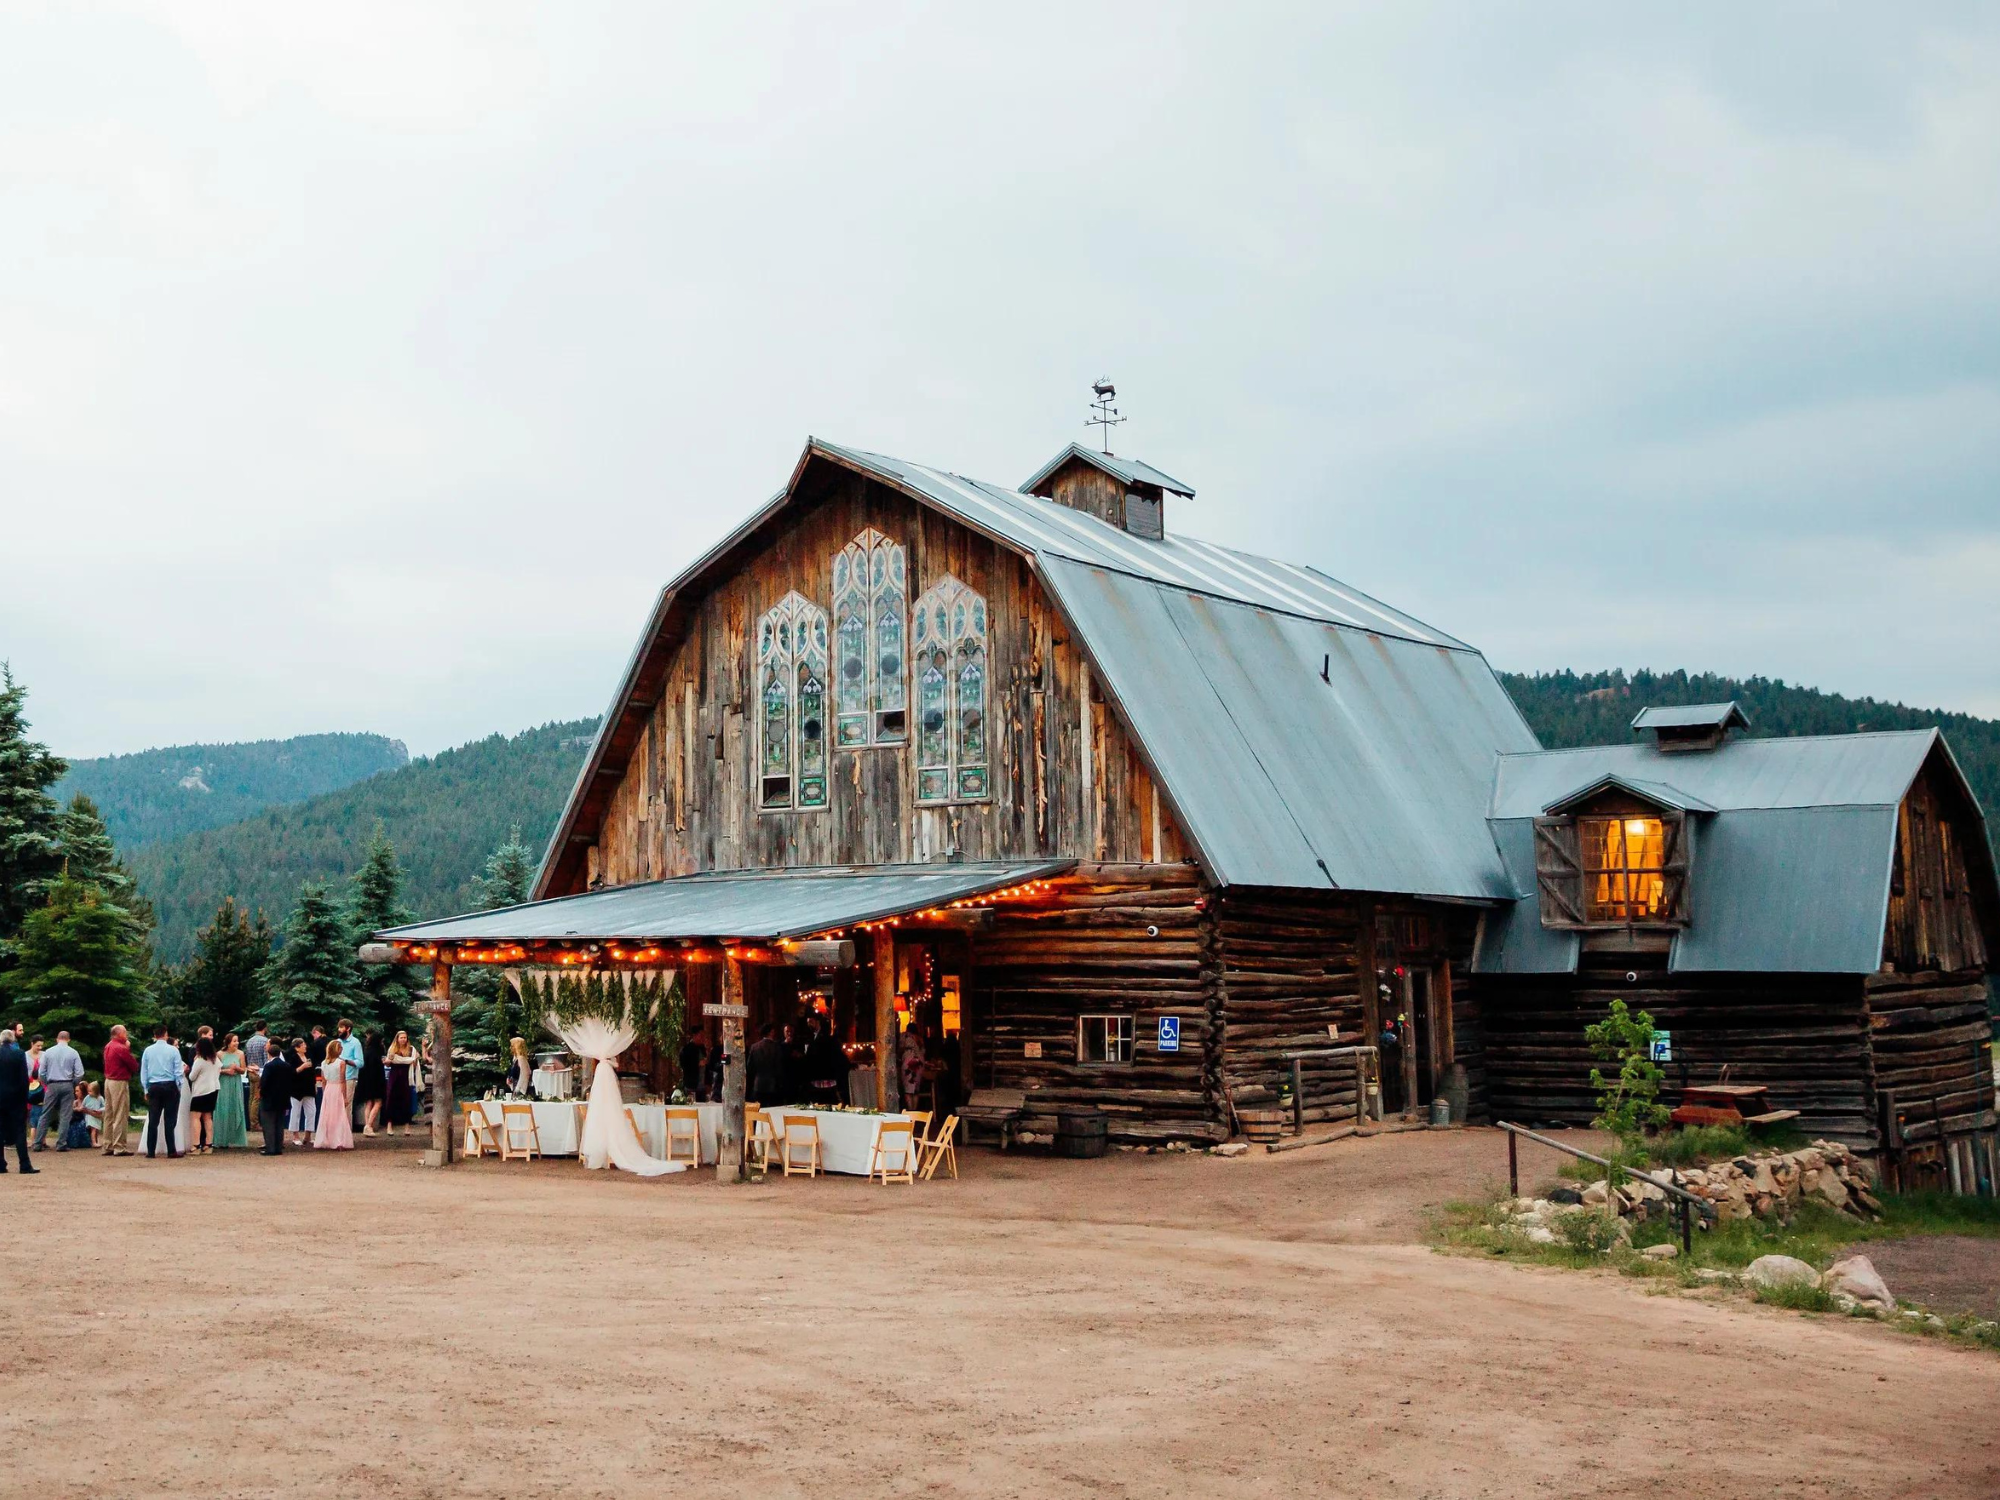 The Barn At Evergreen Memorial Park barn wedding venue in Colorado